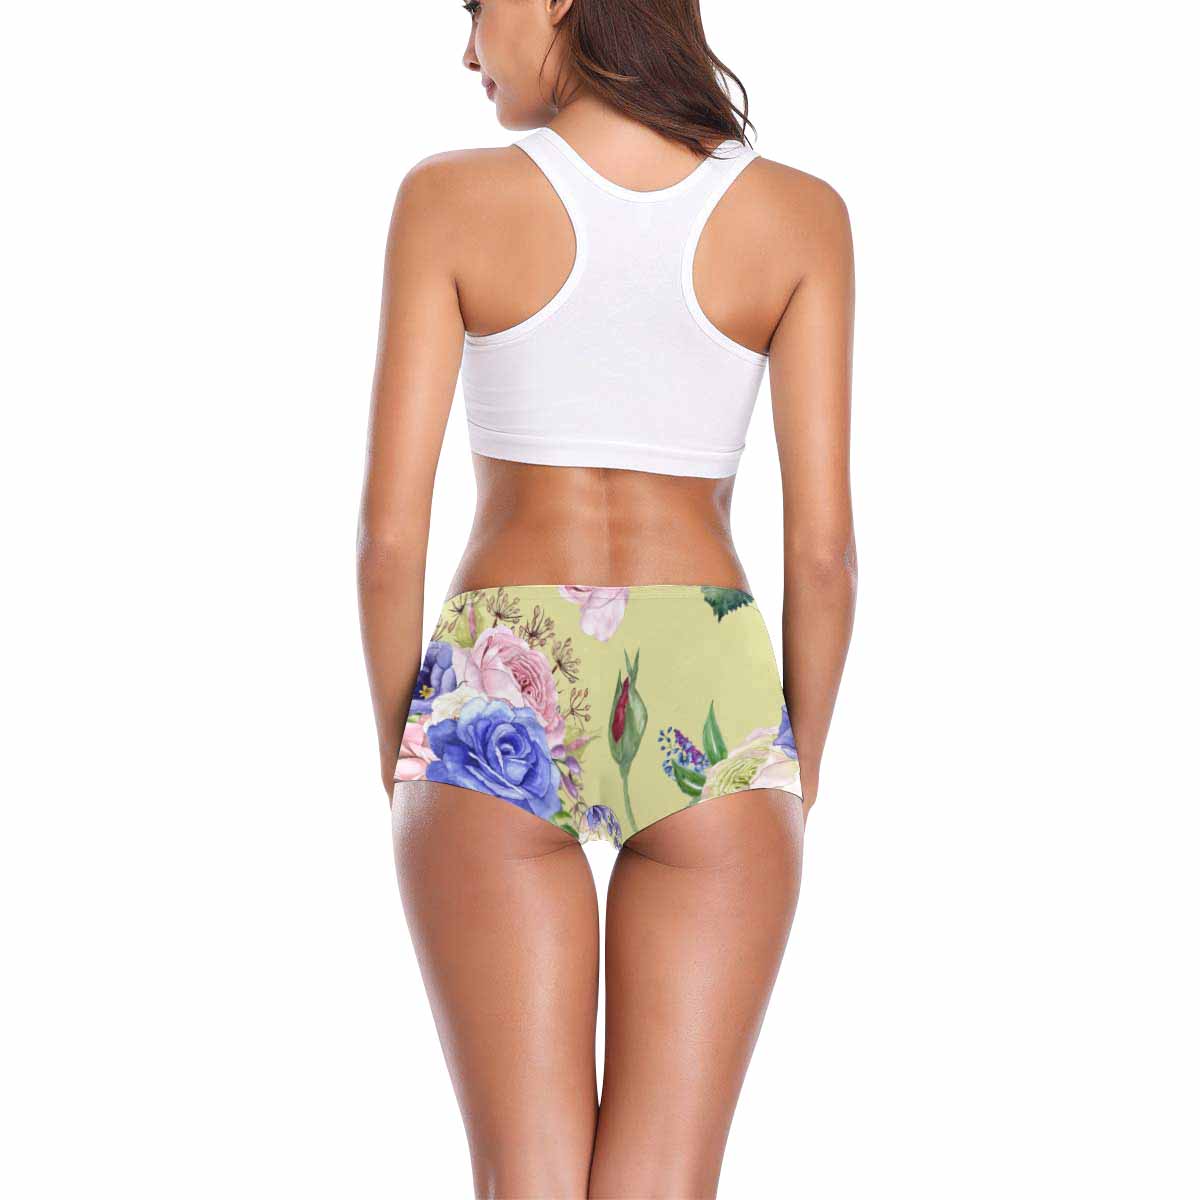 Floral 2, boyshorts, daisy dukes, pum pum shorts, panties, design 61